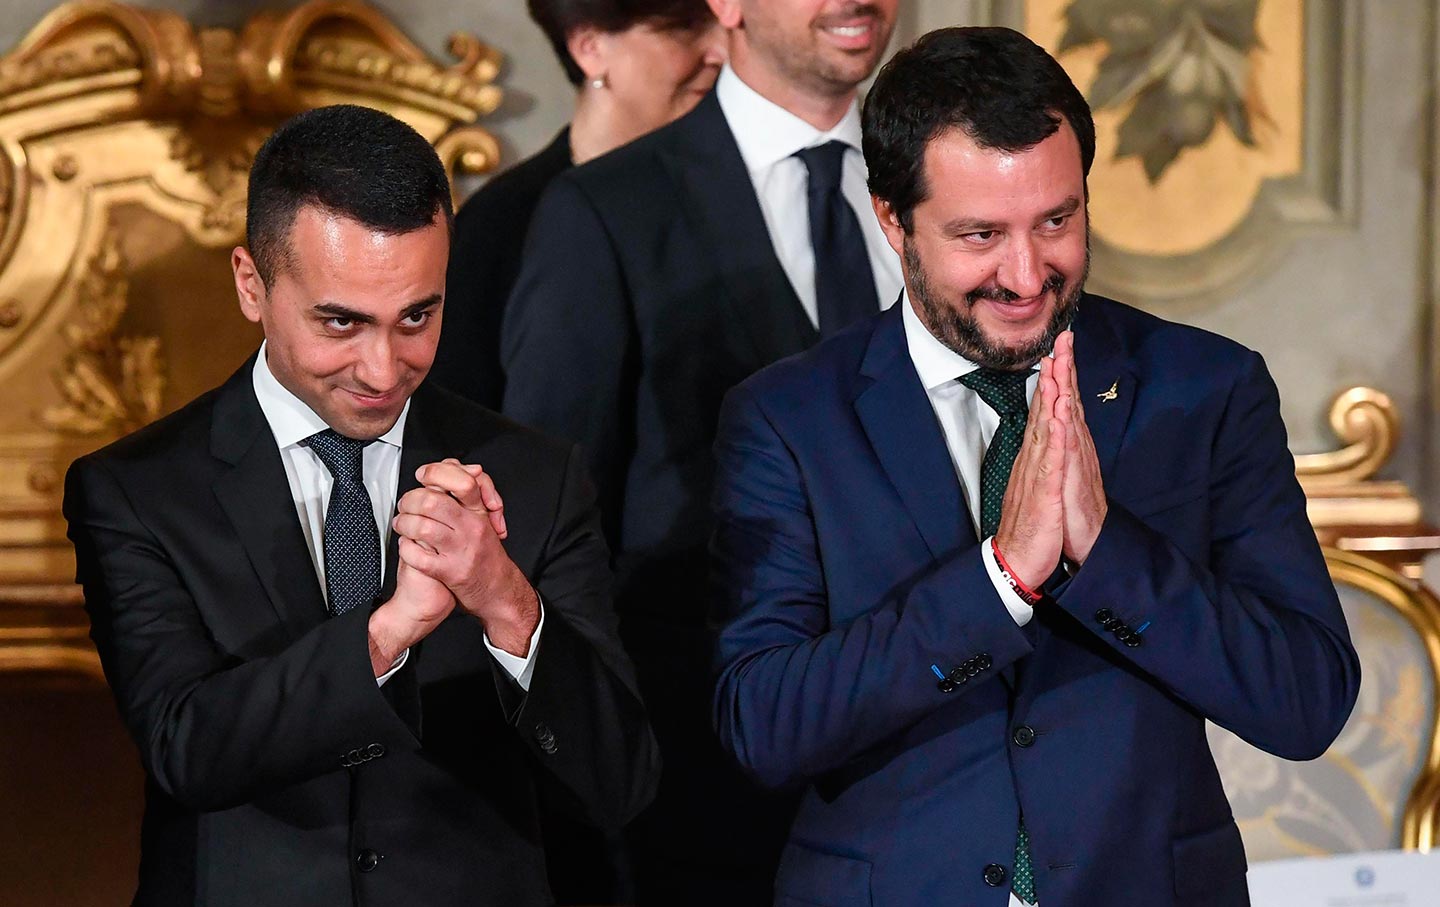 Matteo Salvini’s March on Rome